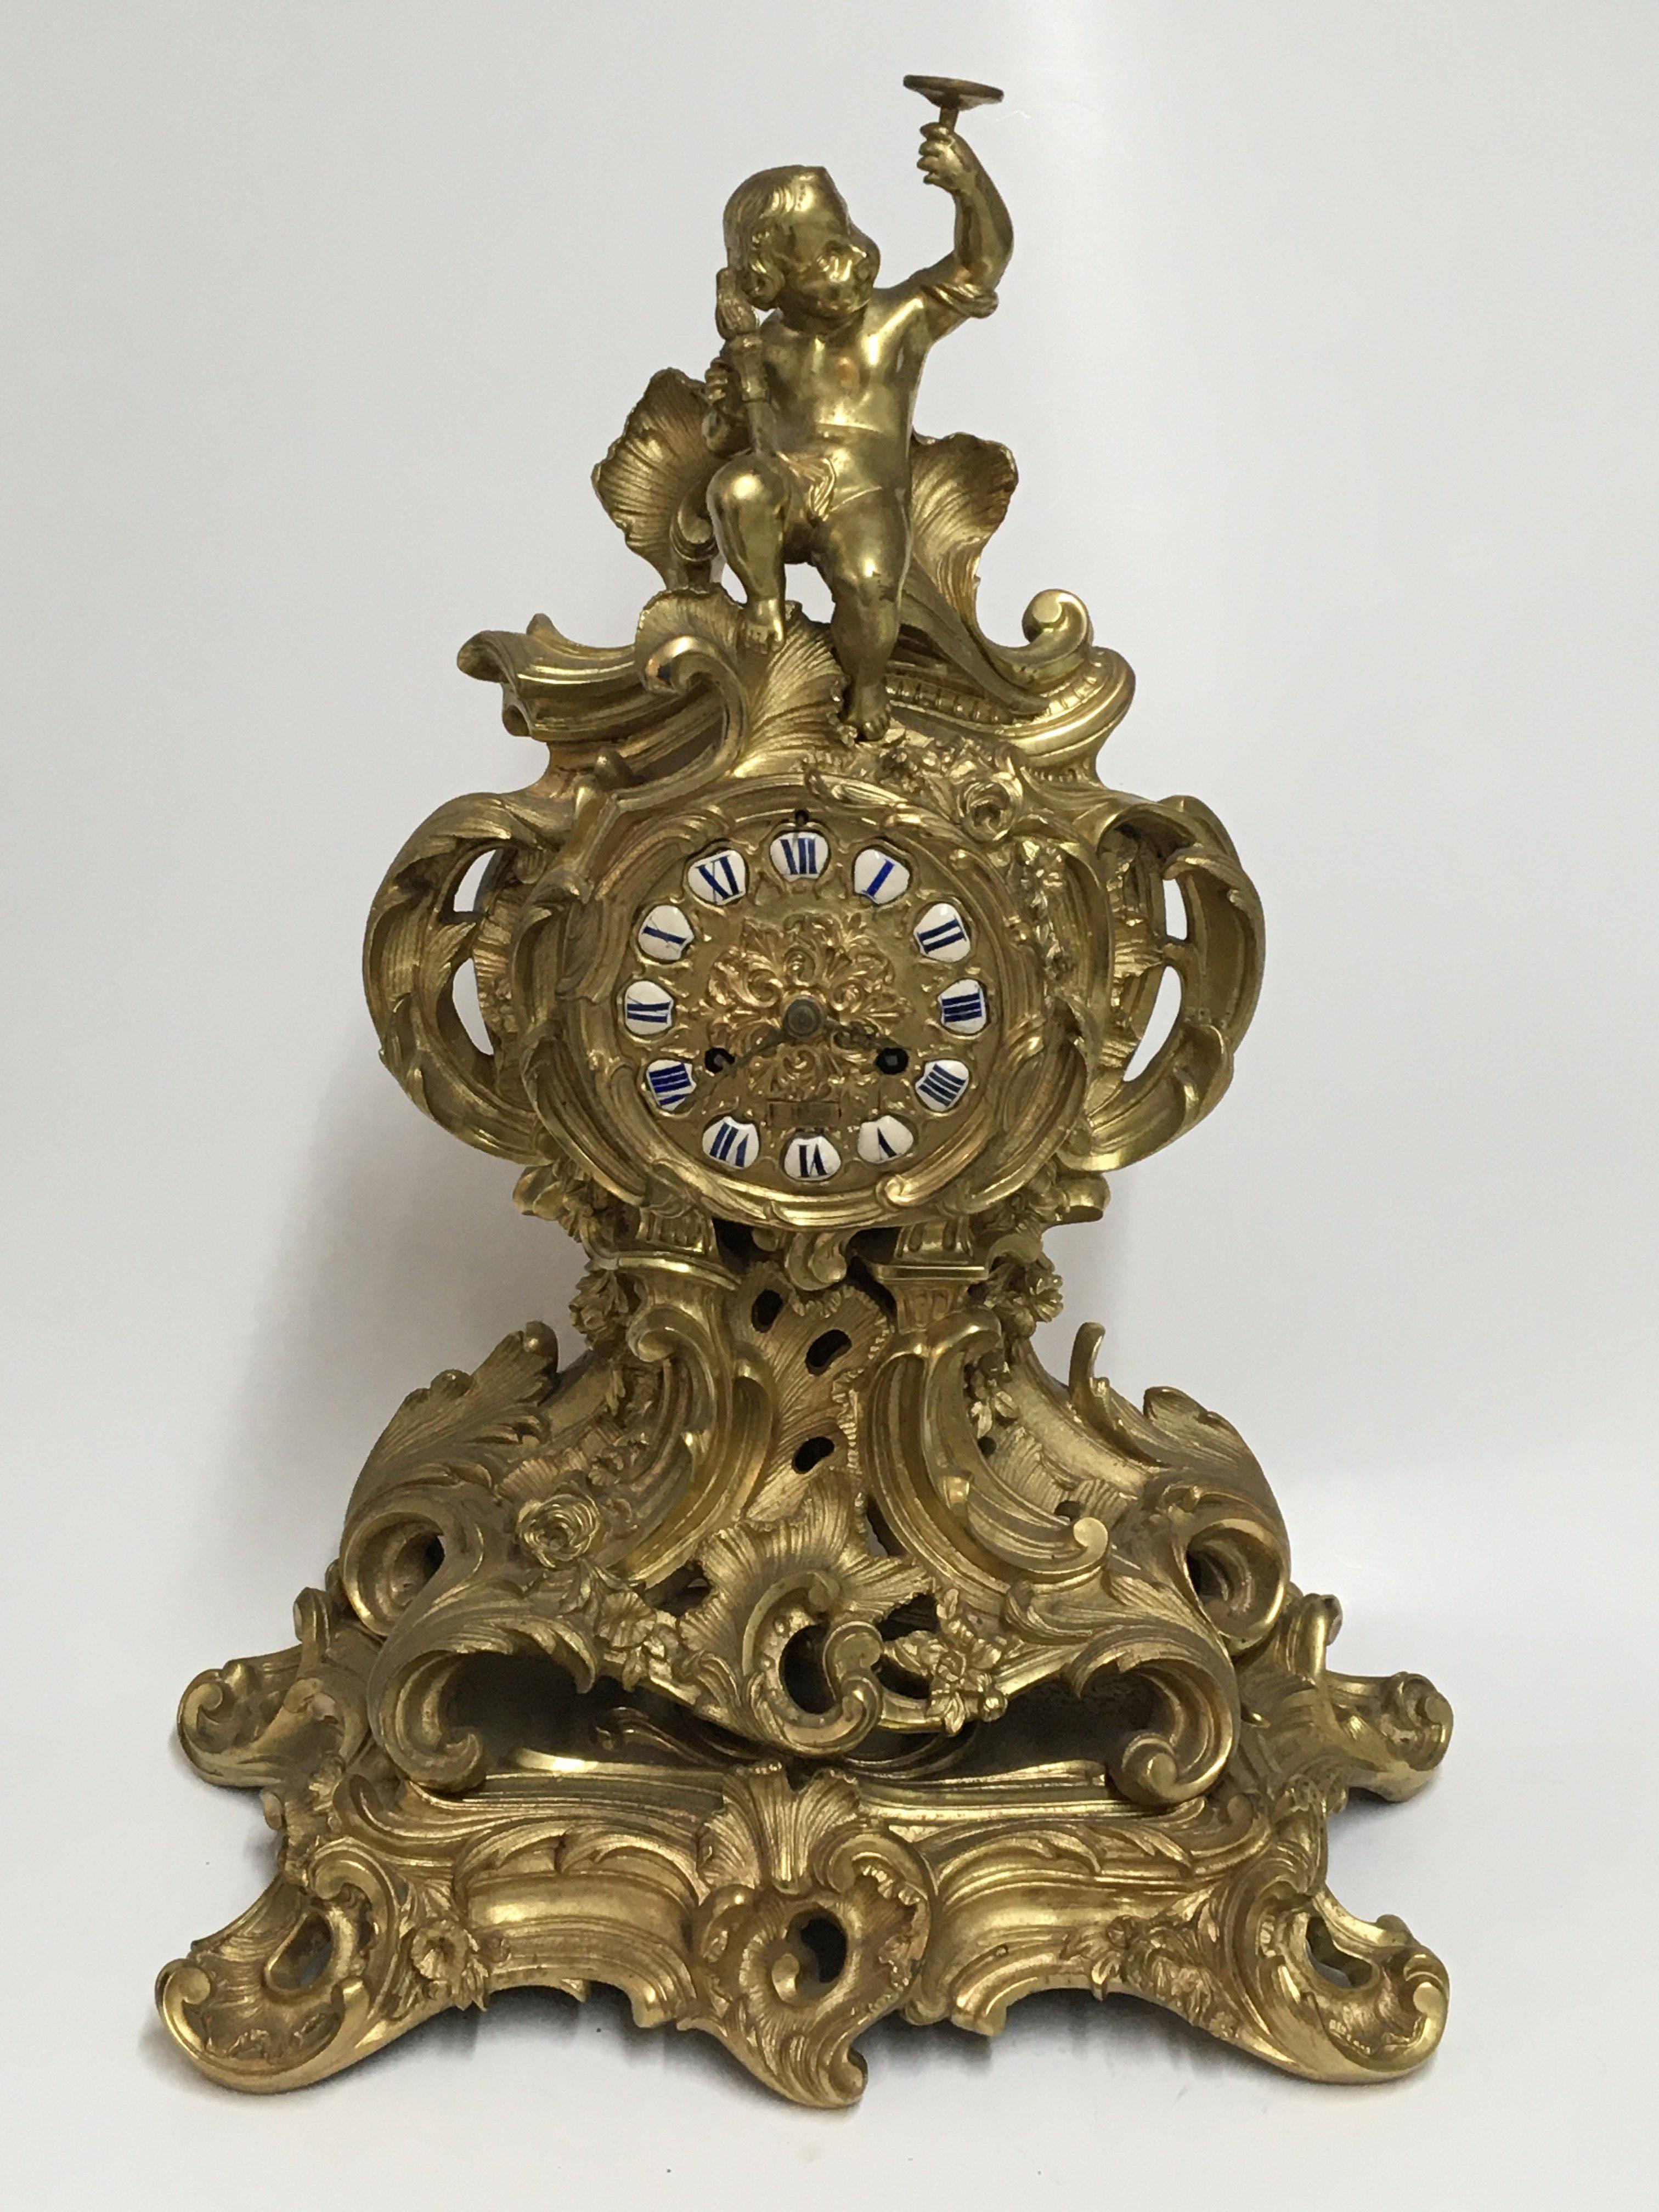 An impressive gilt bronze rococo style clock with